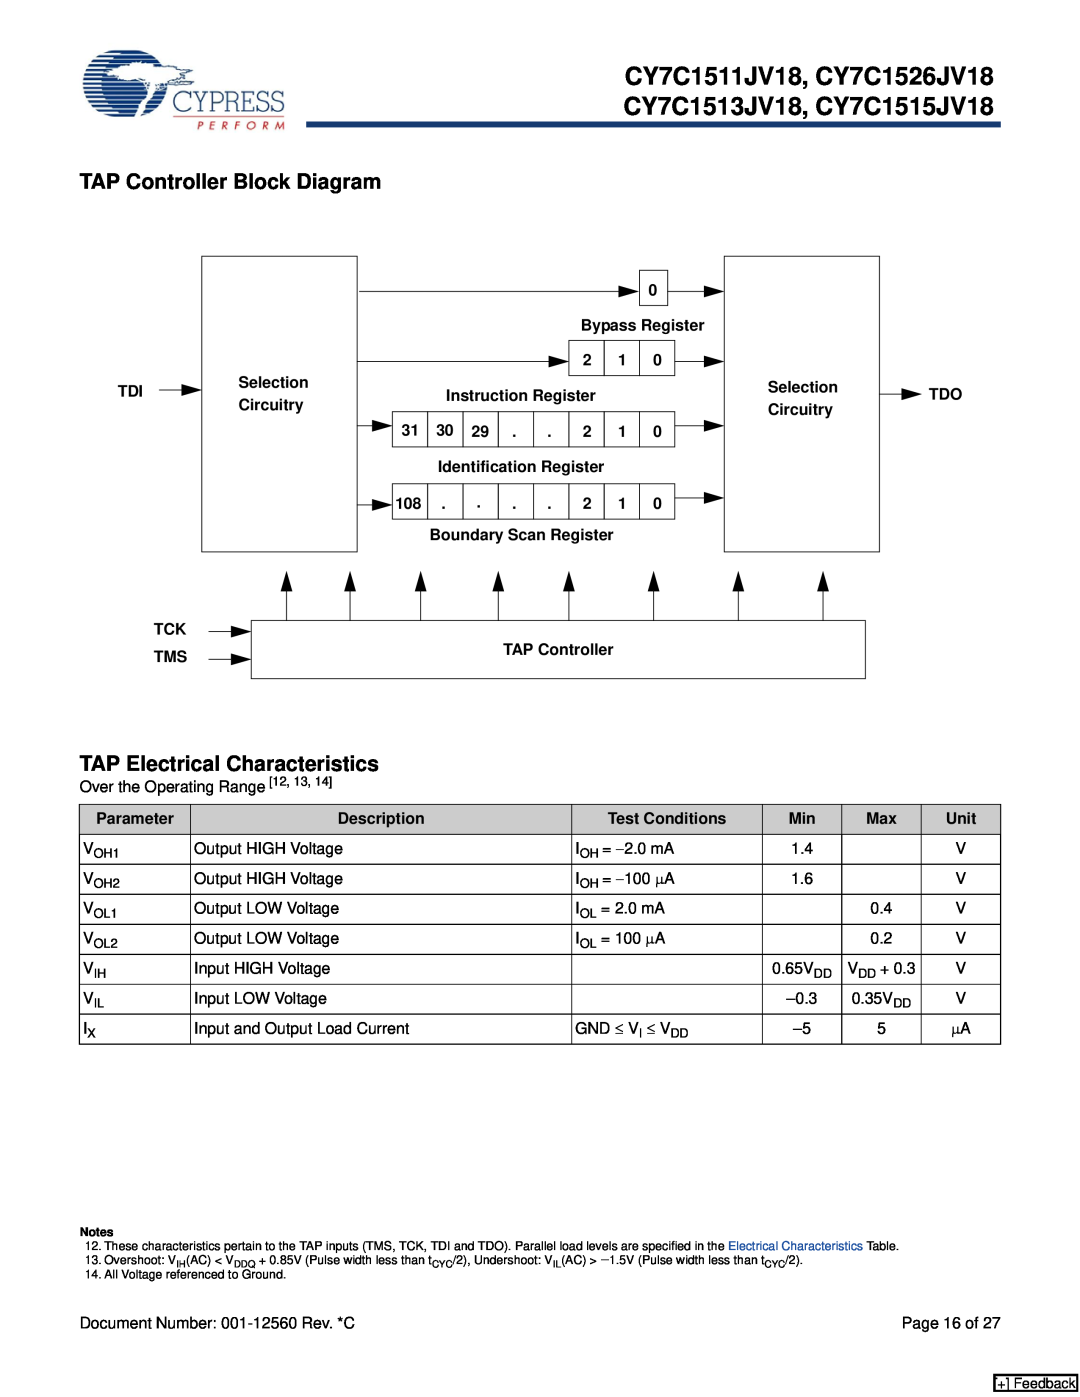 Cypress CY7C1513JV18, CY7C1515JV18, CY7C1511JV18, CY7C1526JV18 TAP Controller Block Diagram, TAP Electrical Characteristics 